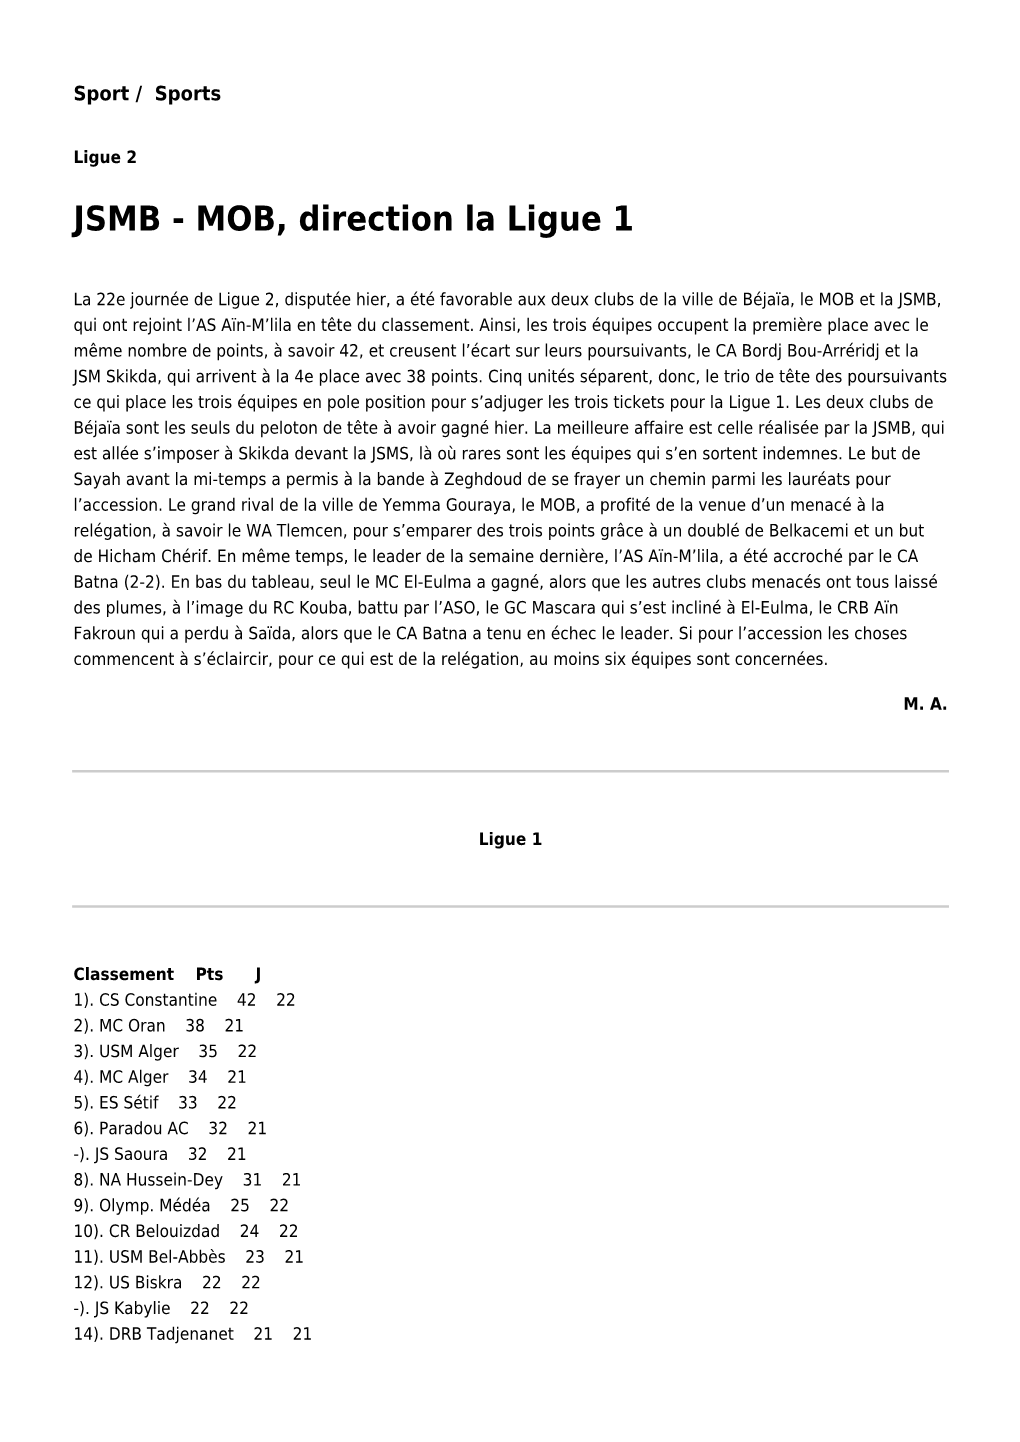 JSMB - MOB, Direction La Ligue 1